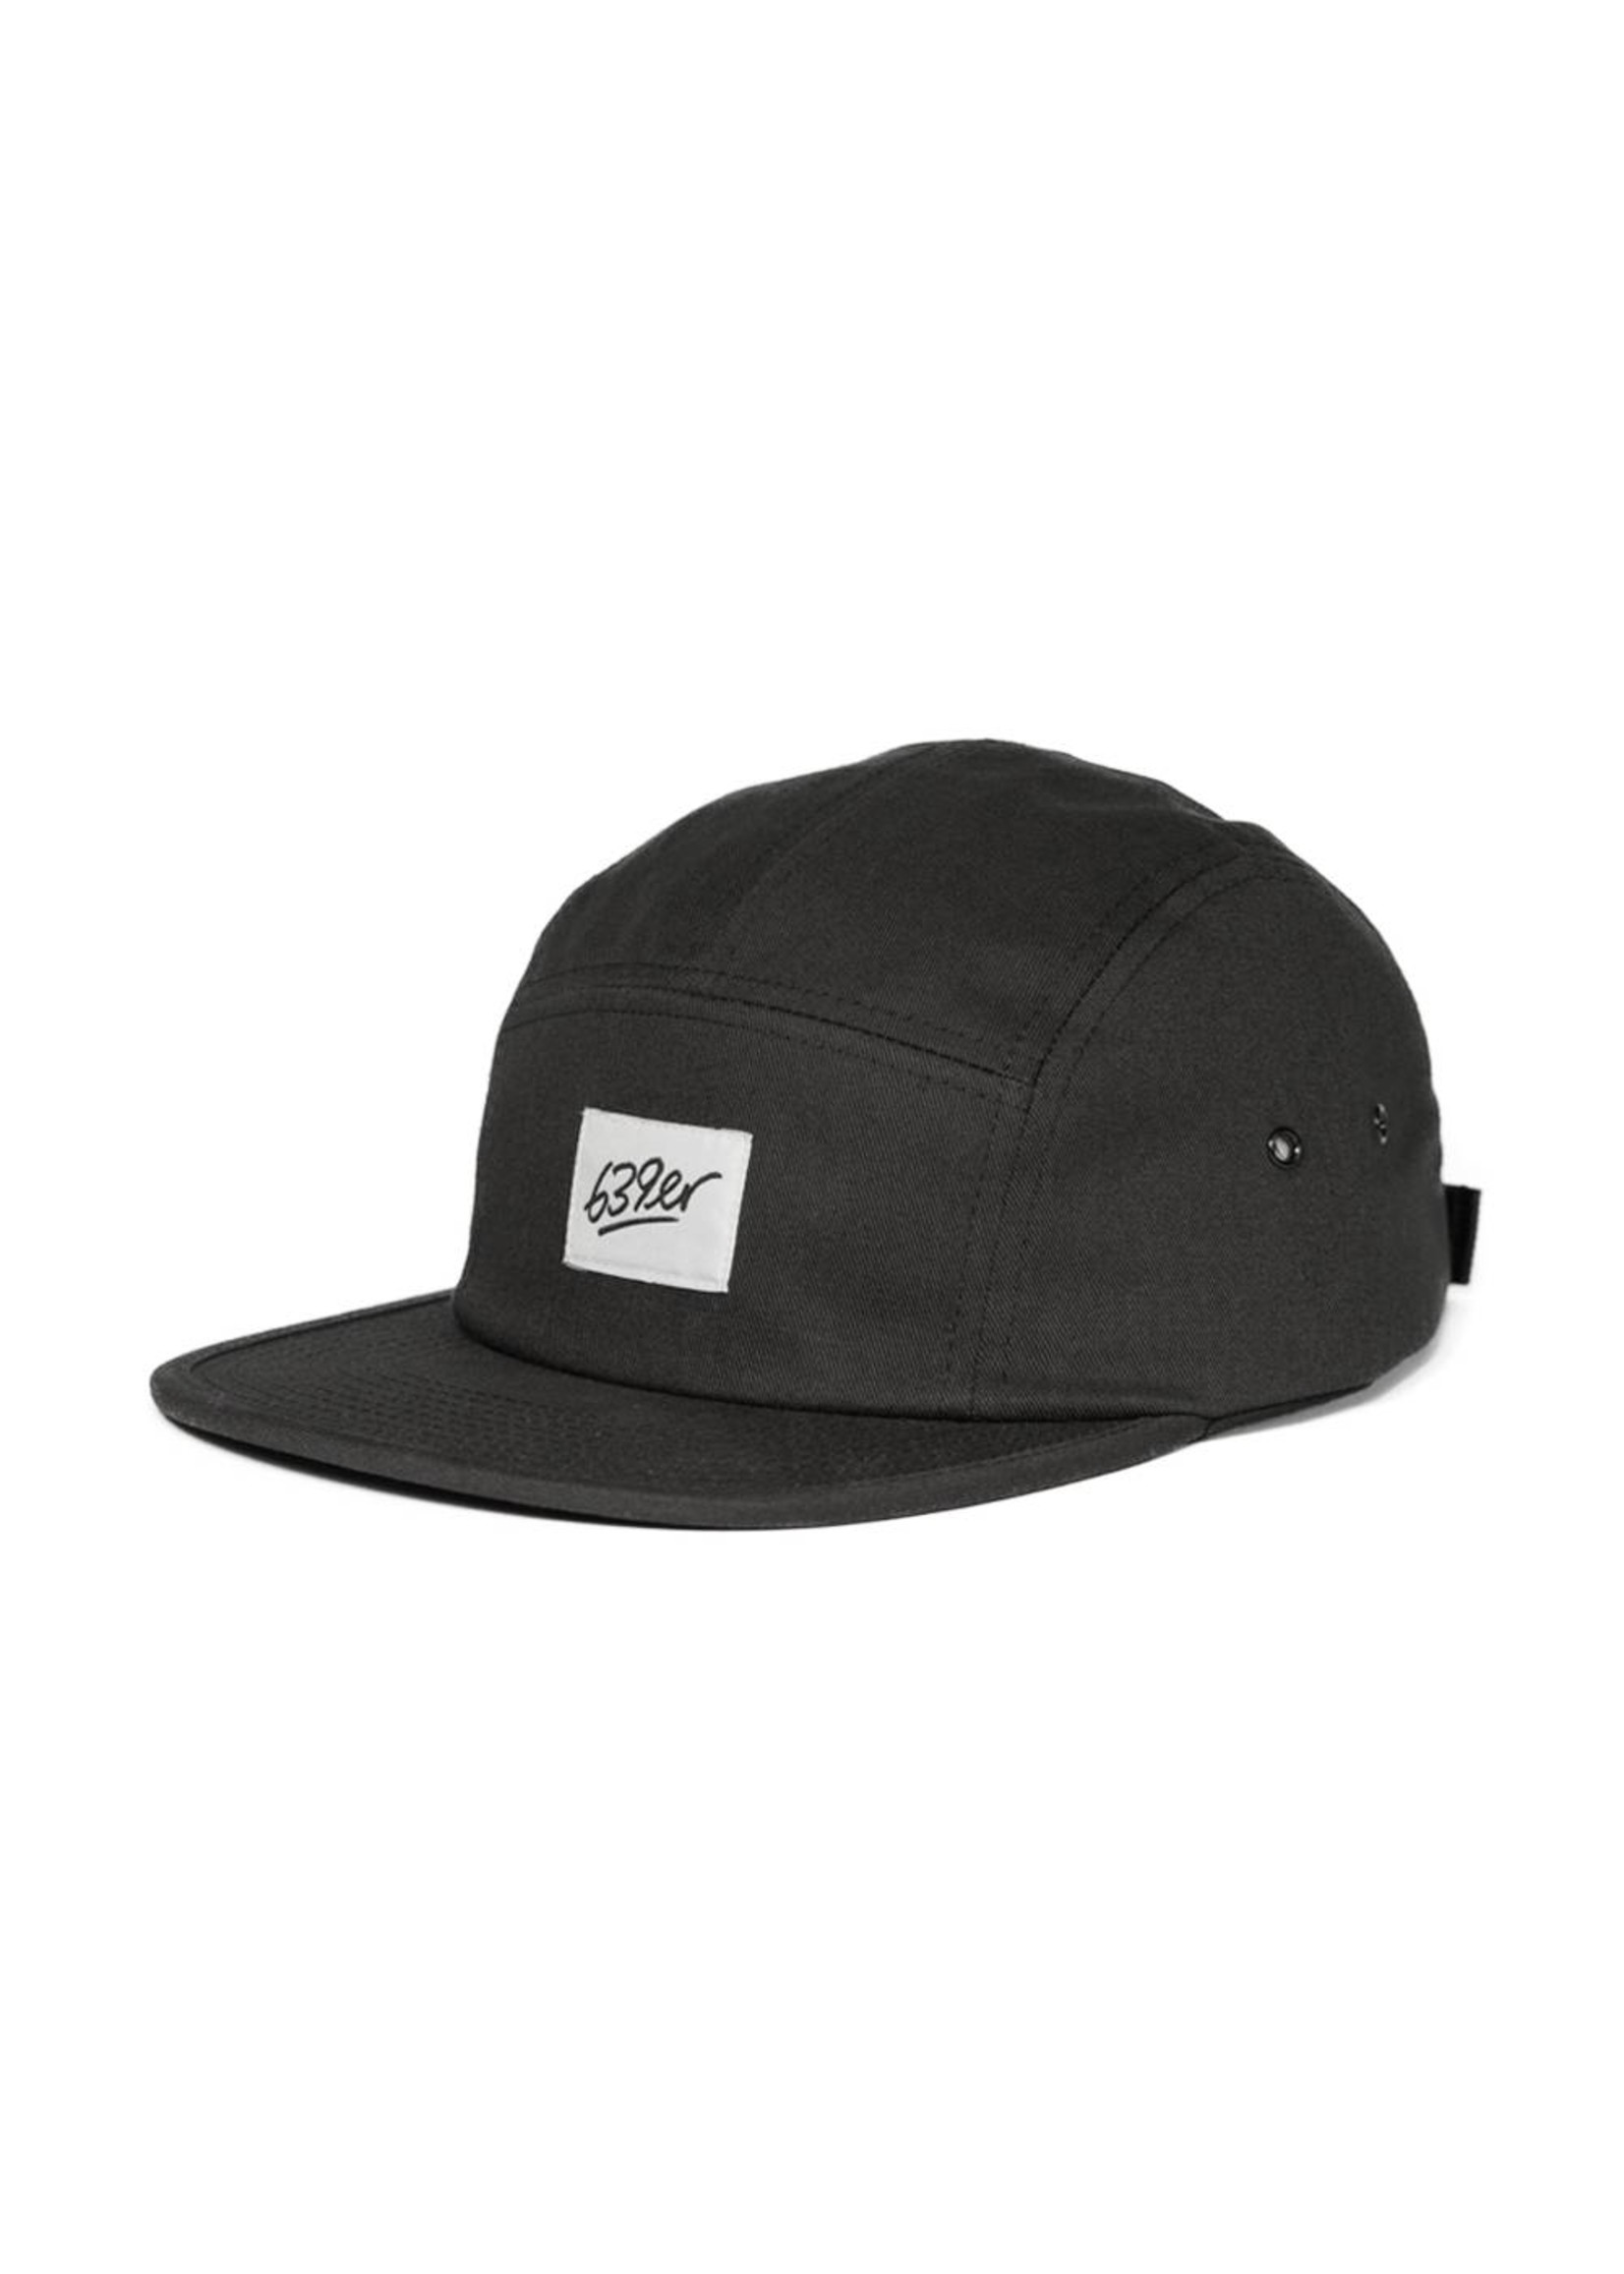 639ER 5 PANEL CAP black